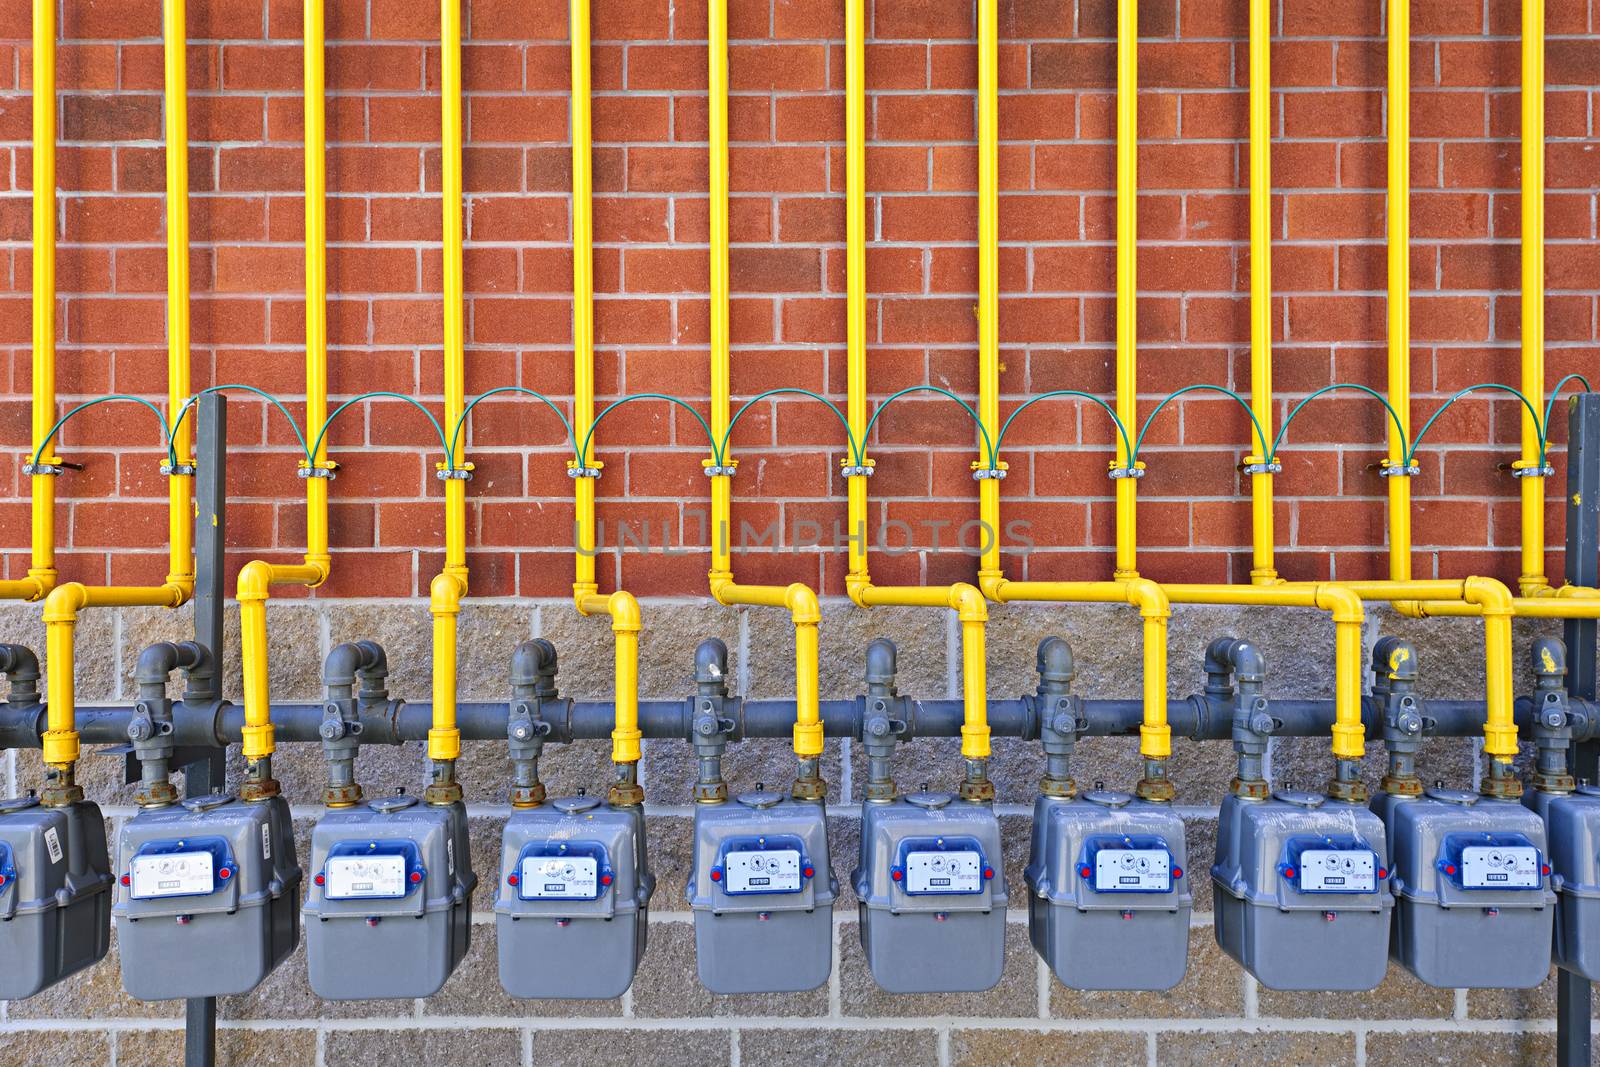 Gas meters on brick wall by elenathewise